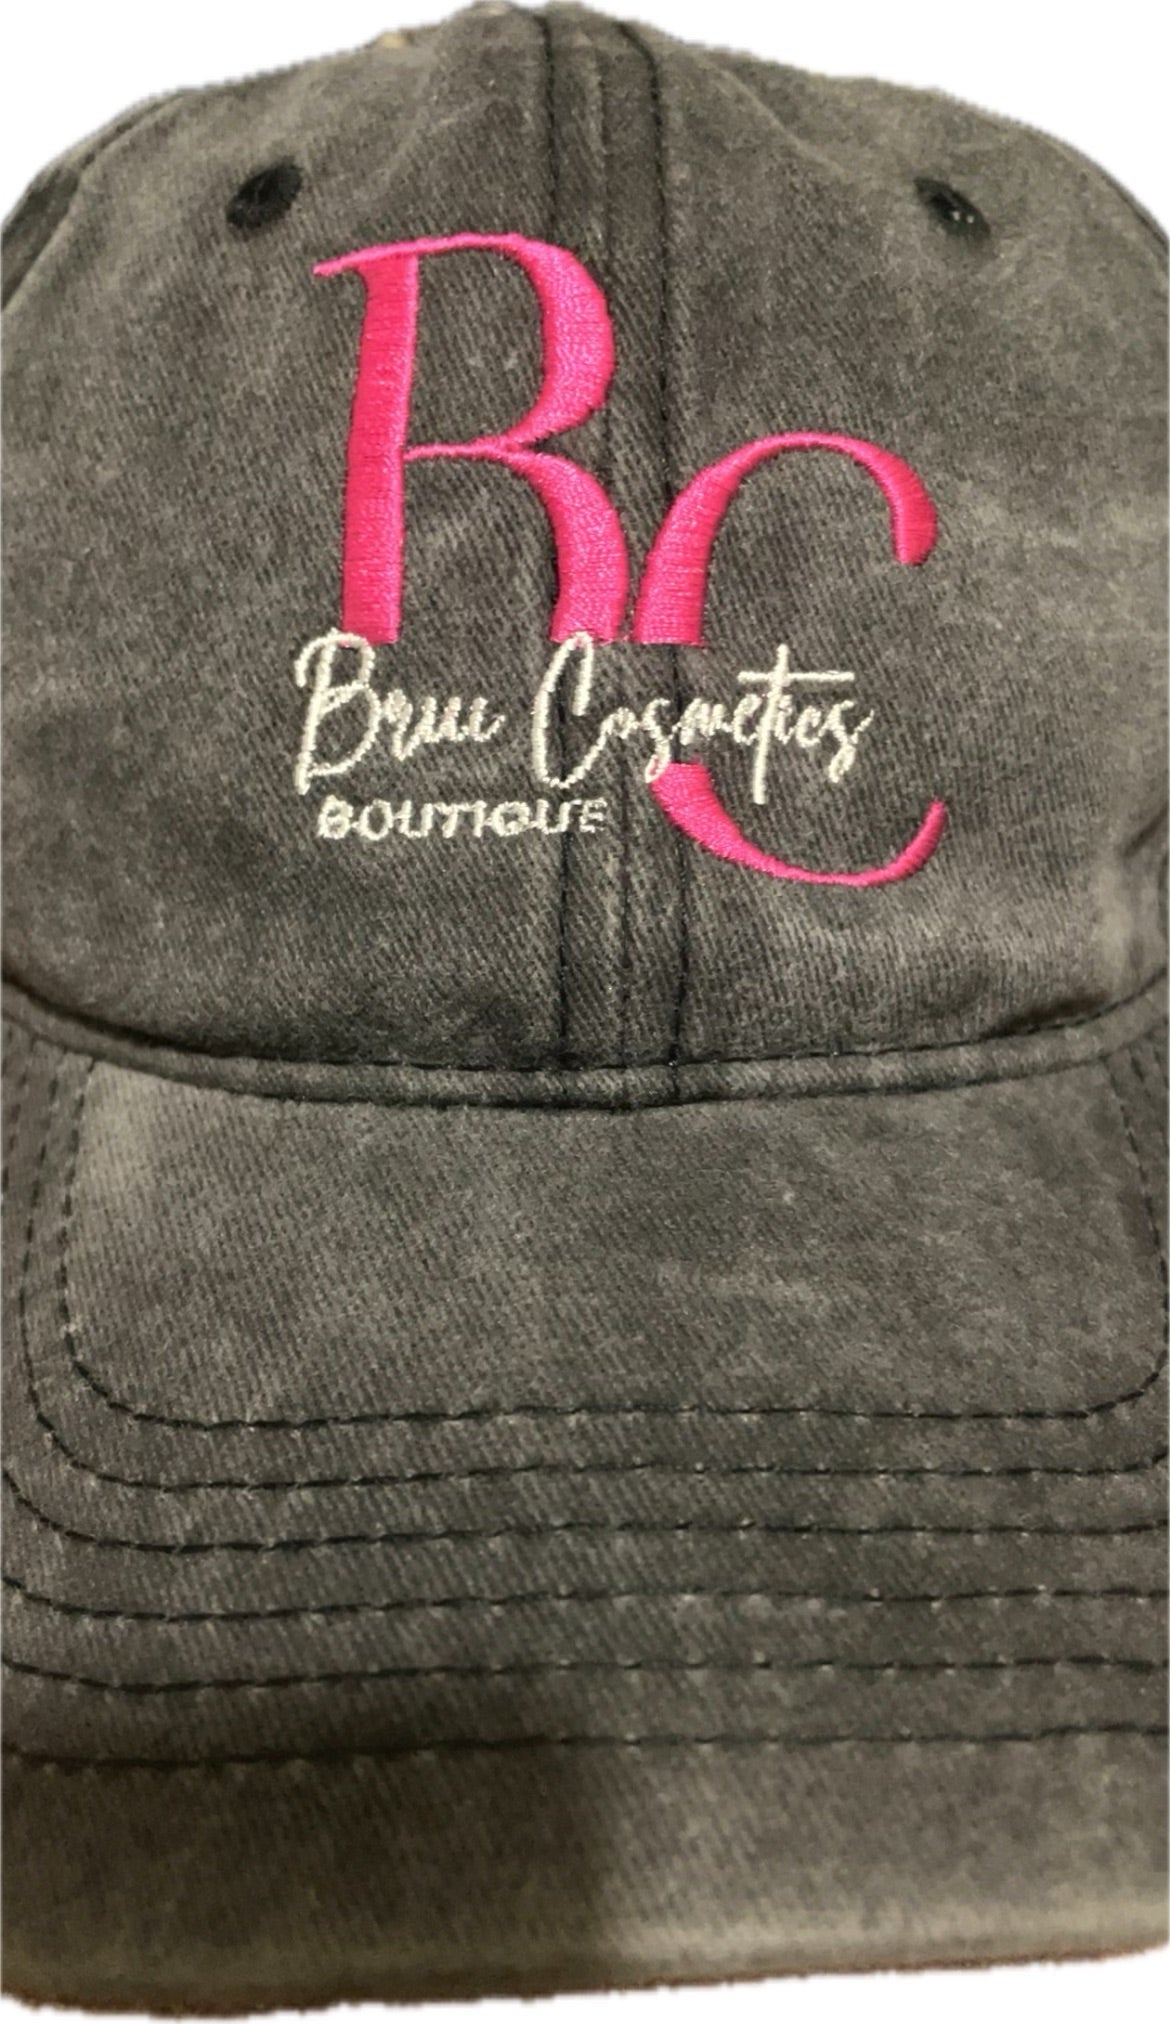 Briii Cosmetics Boutique Hat